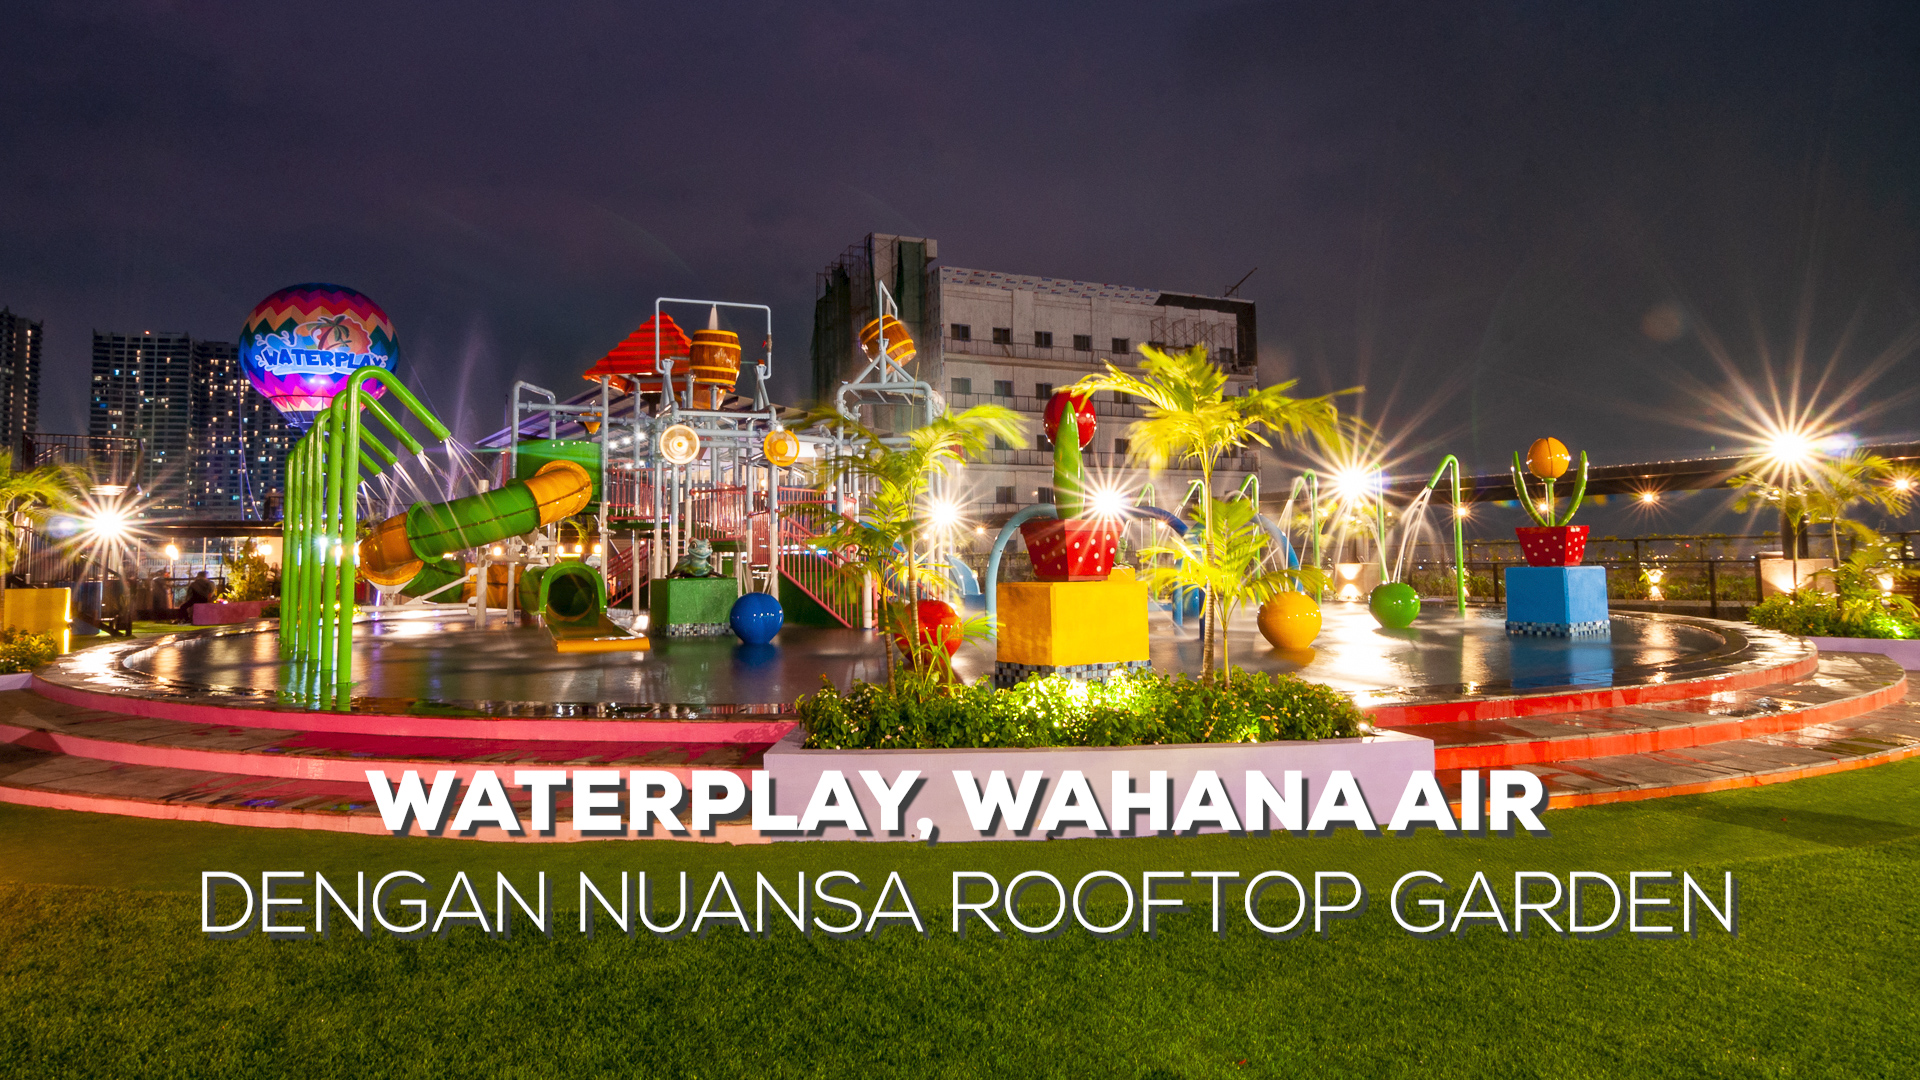 Waterplay, Wahana Air dengan Nuansa Rooftop Garden. (Alidrian Fahwi/ipol.id)